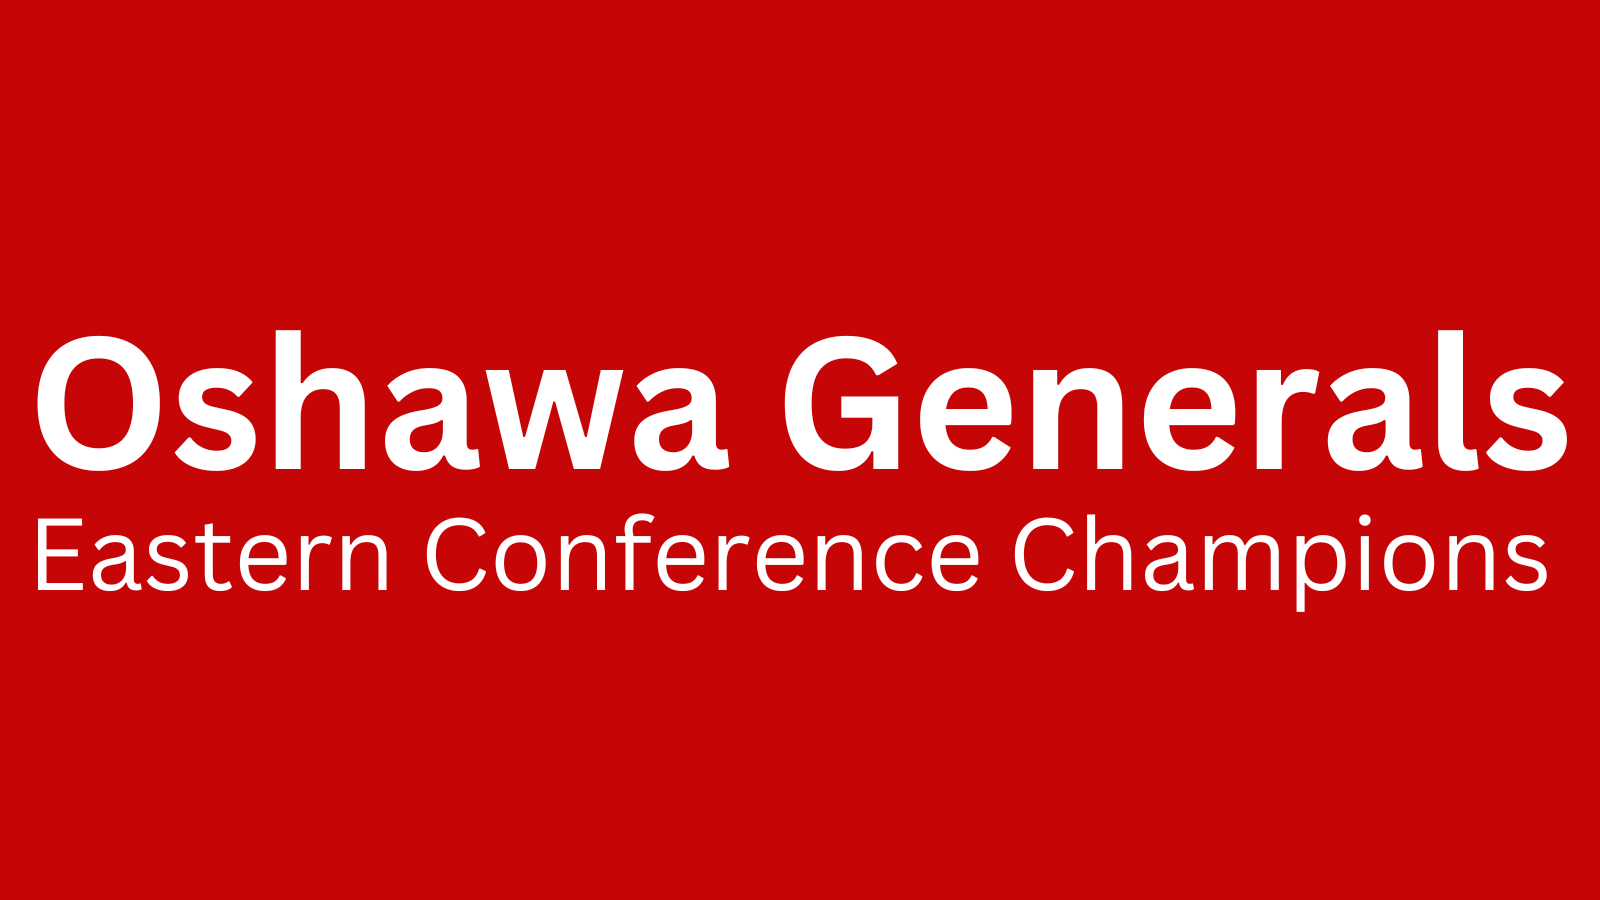 Oshawa Generals Eastern Conference Champions